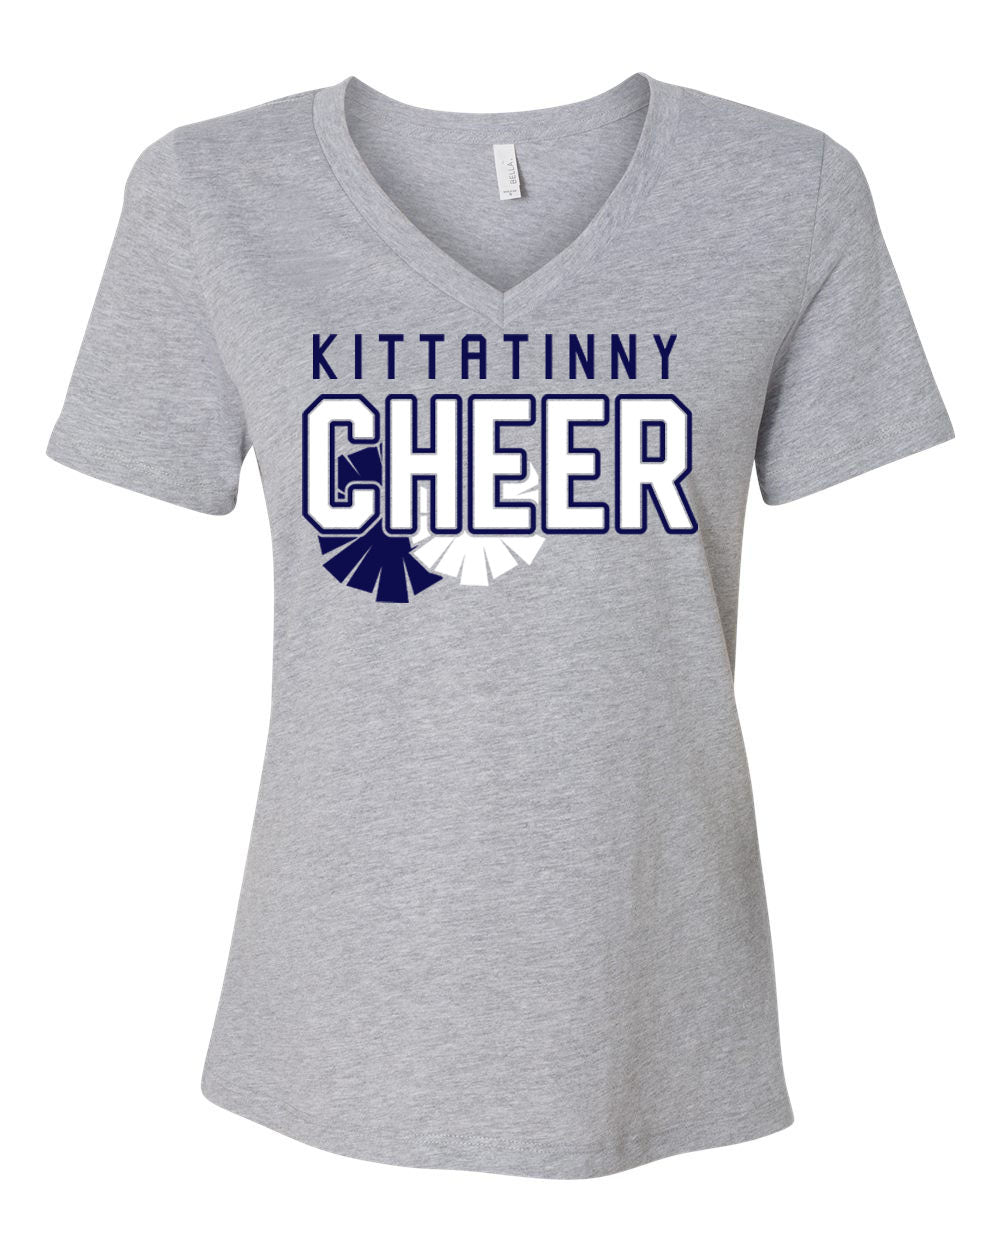 Kittatinny Cheer Design 4 V-neck T-Shirt